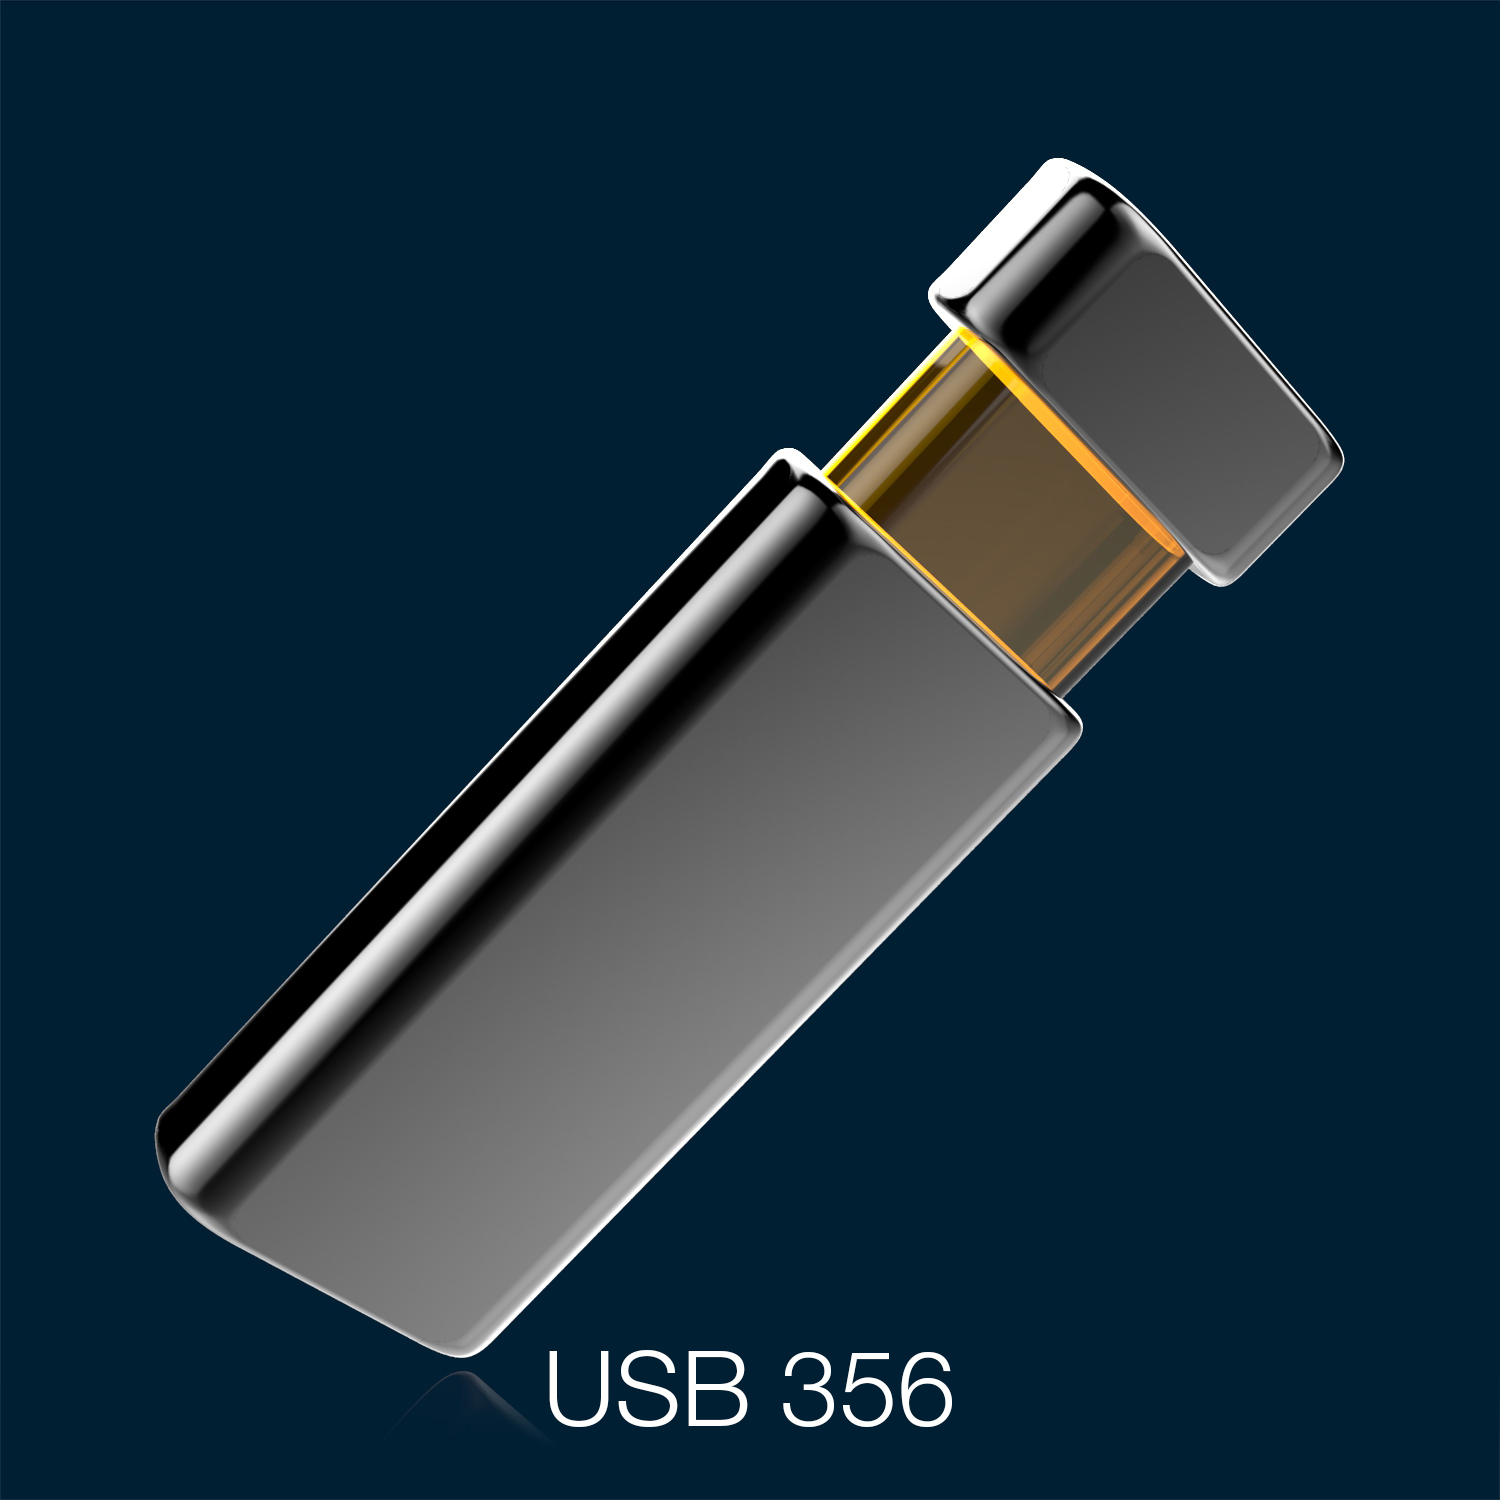 USB 356